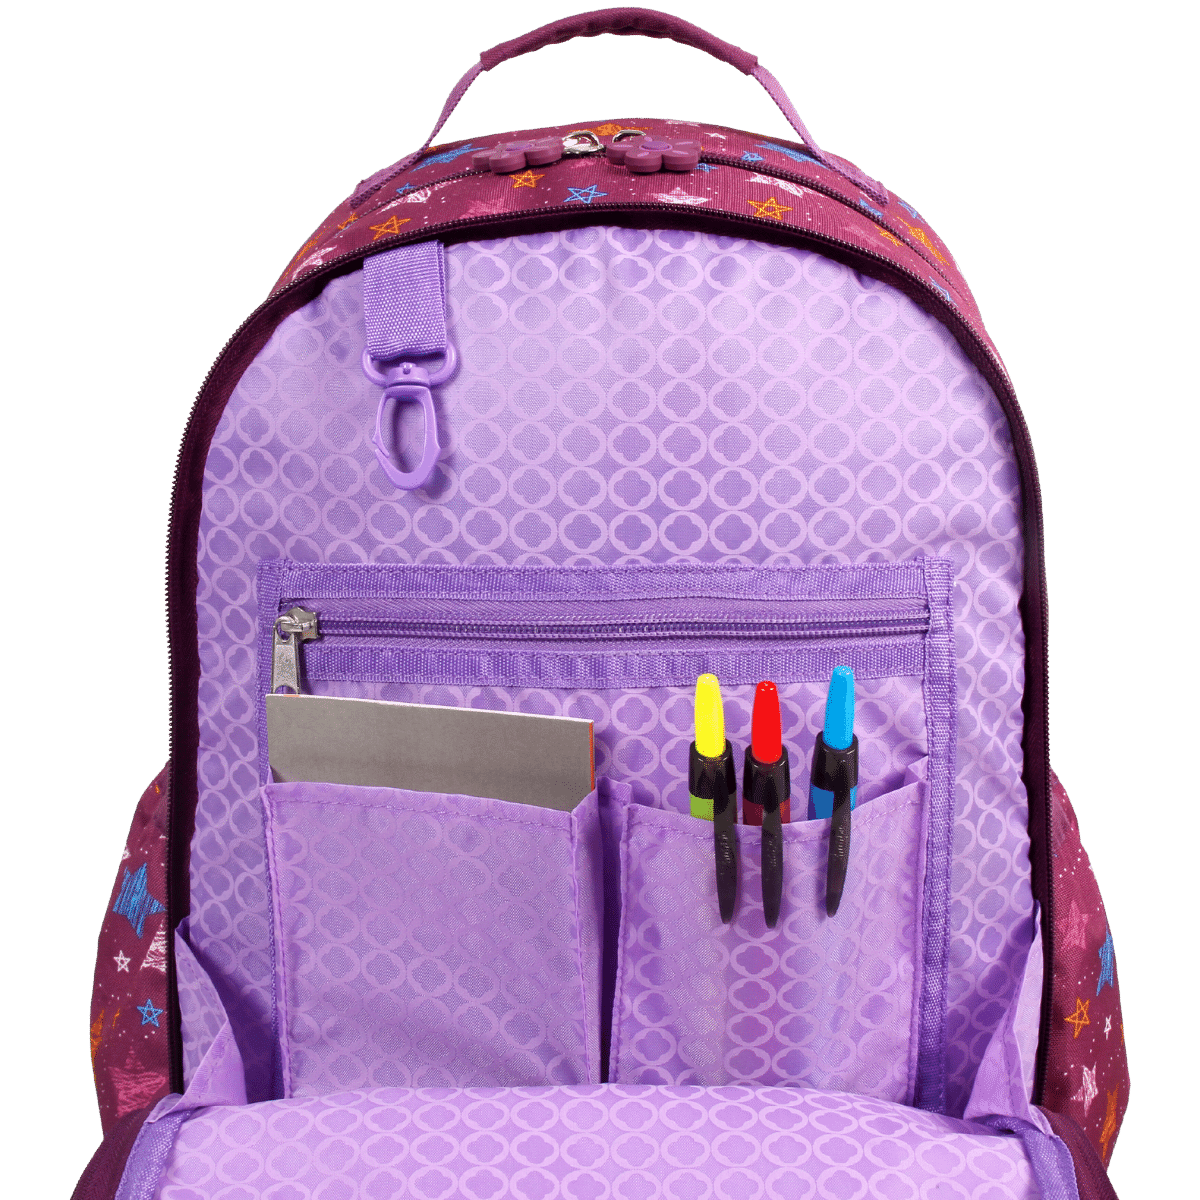 Duet Kids Backpack & Detachable Lunch Box Set - JWorldstore